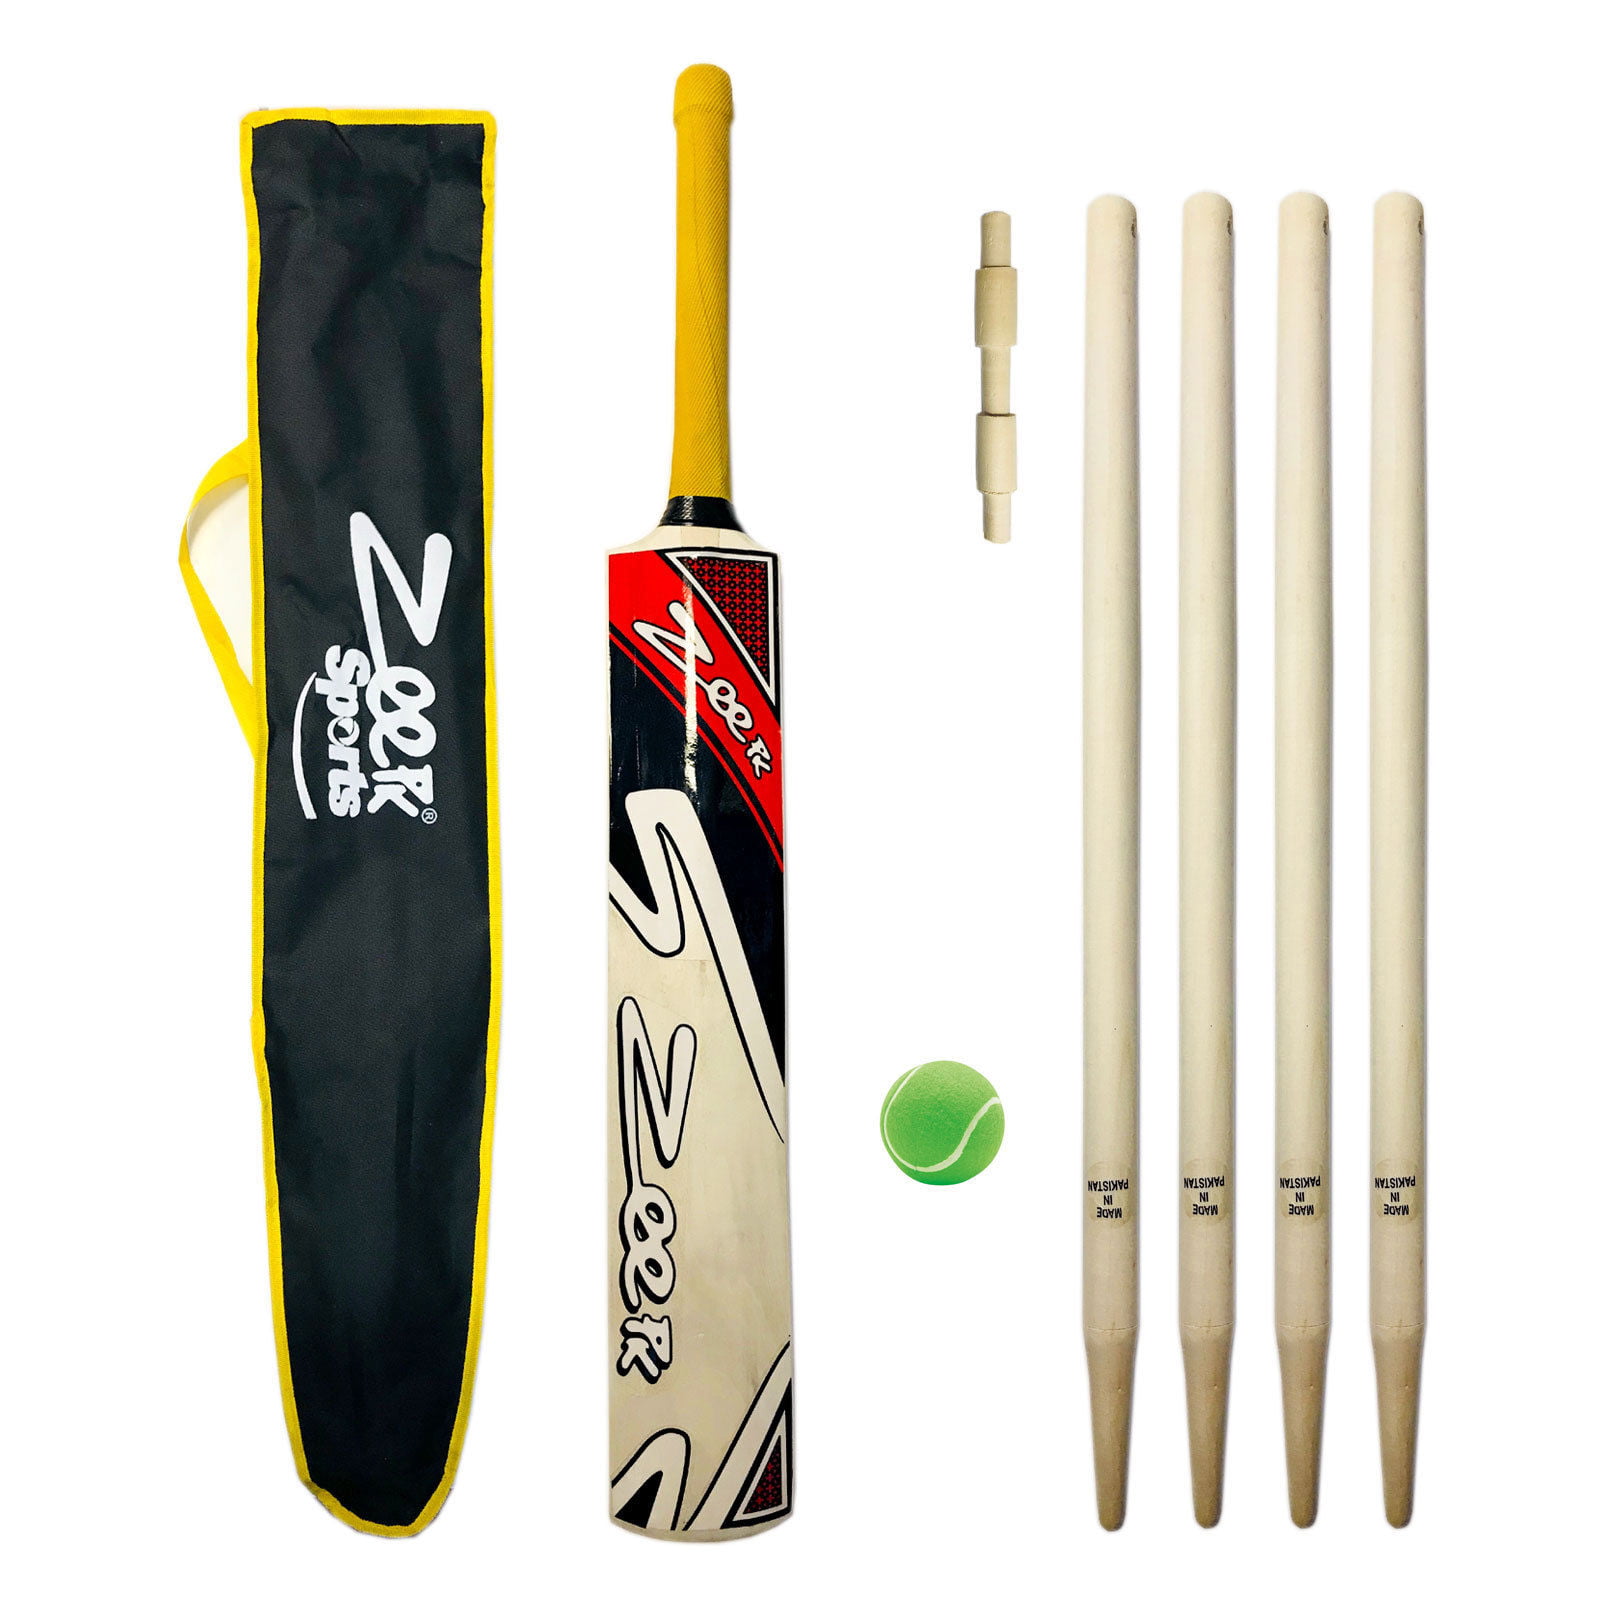 Yr Full Size Scoremaster Complete Batting Set With Kashmir Willow Bat For 13 